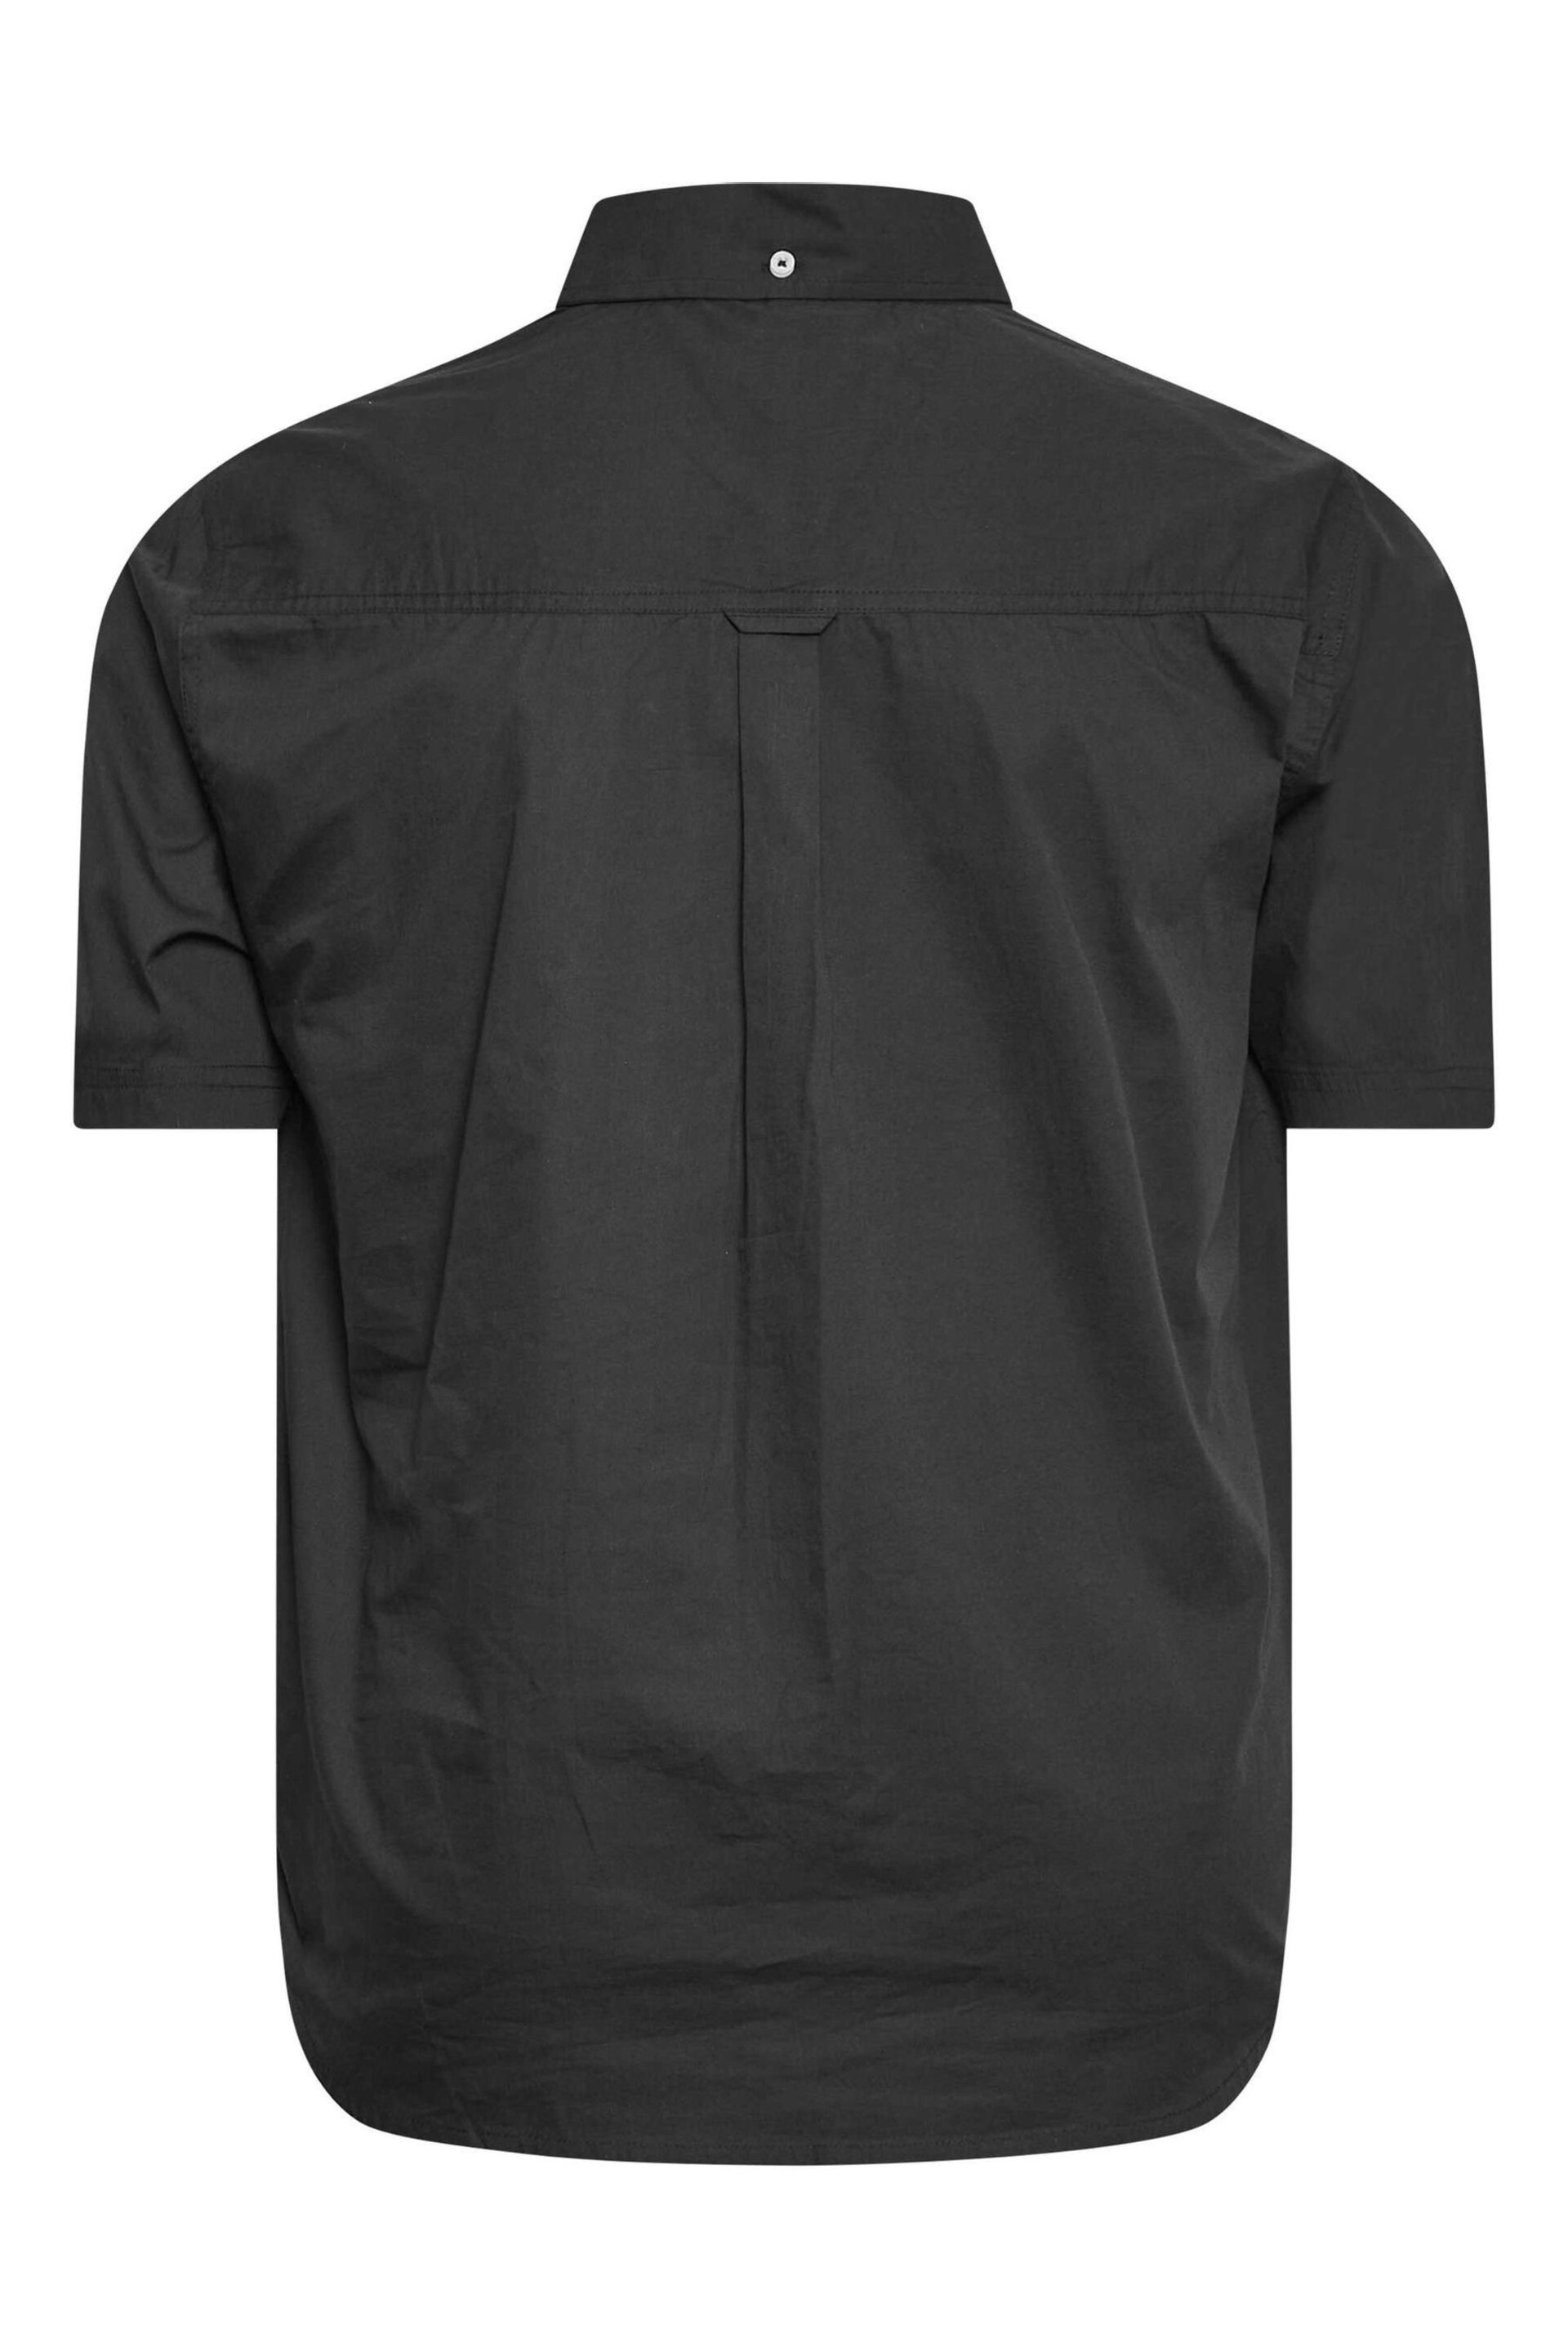 BadRhino Big & Tall Black Short Sleeve Poplin Shirt - Image 3 of 3